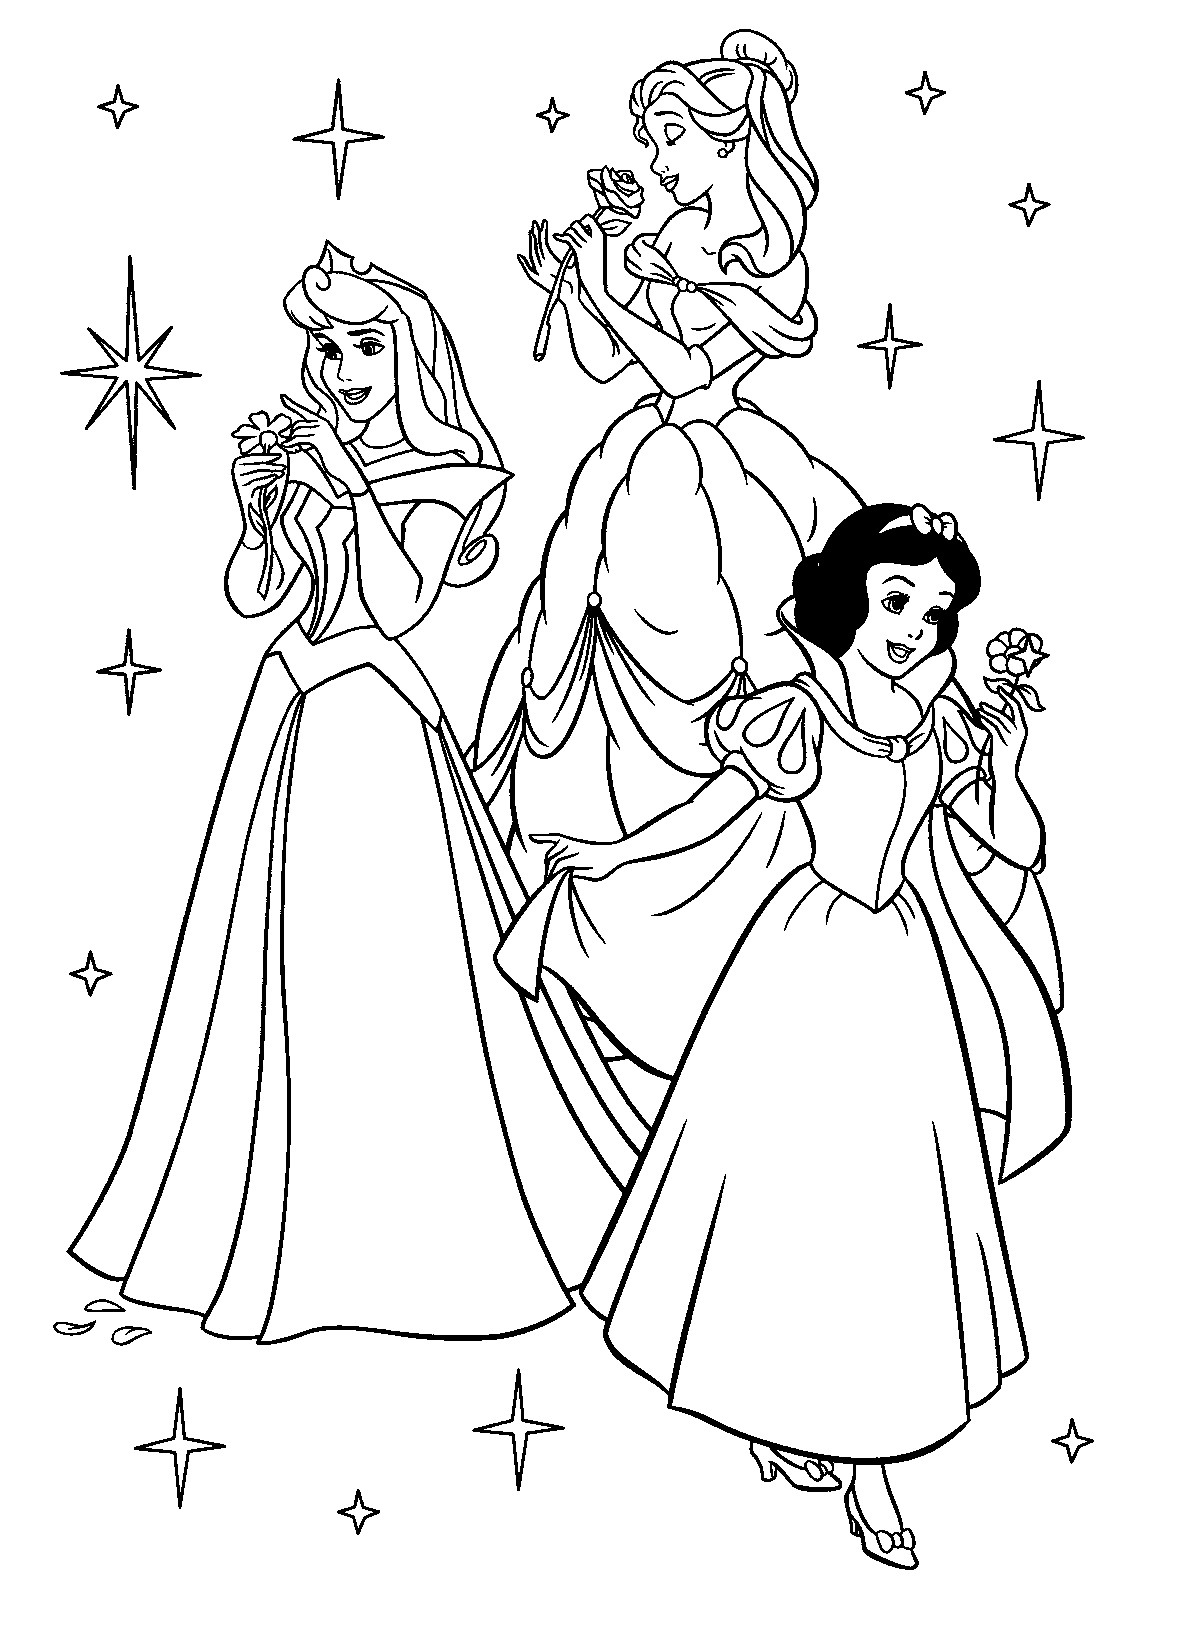 Free Printable Disney Princess Coloring Pages
 Princess Coloring Pages Best Coloring Pages For Kids